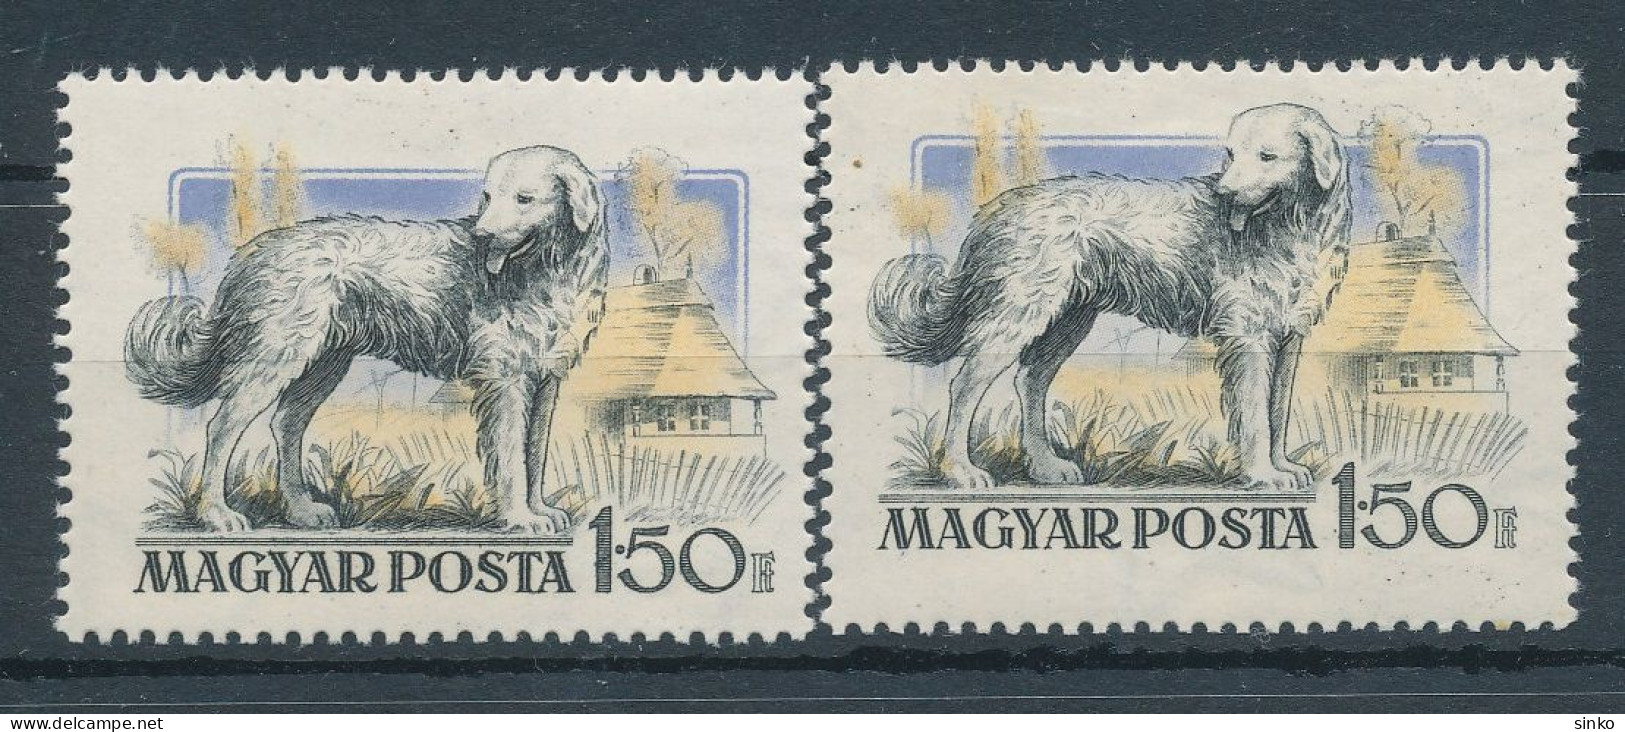 1956. Hungarian Dog Breeds (I.) - Misprint - Errors, Freaks & Oddities (EFO)